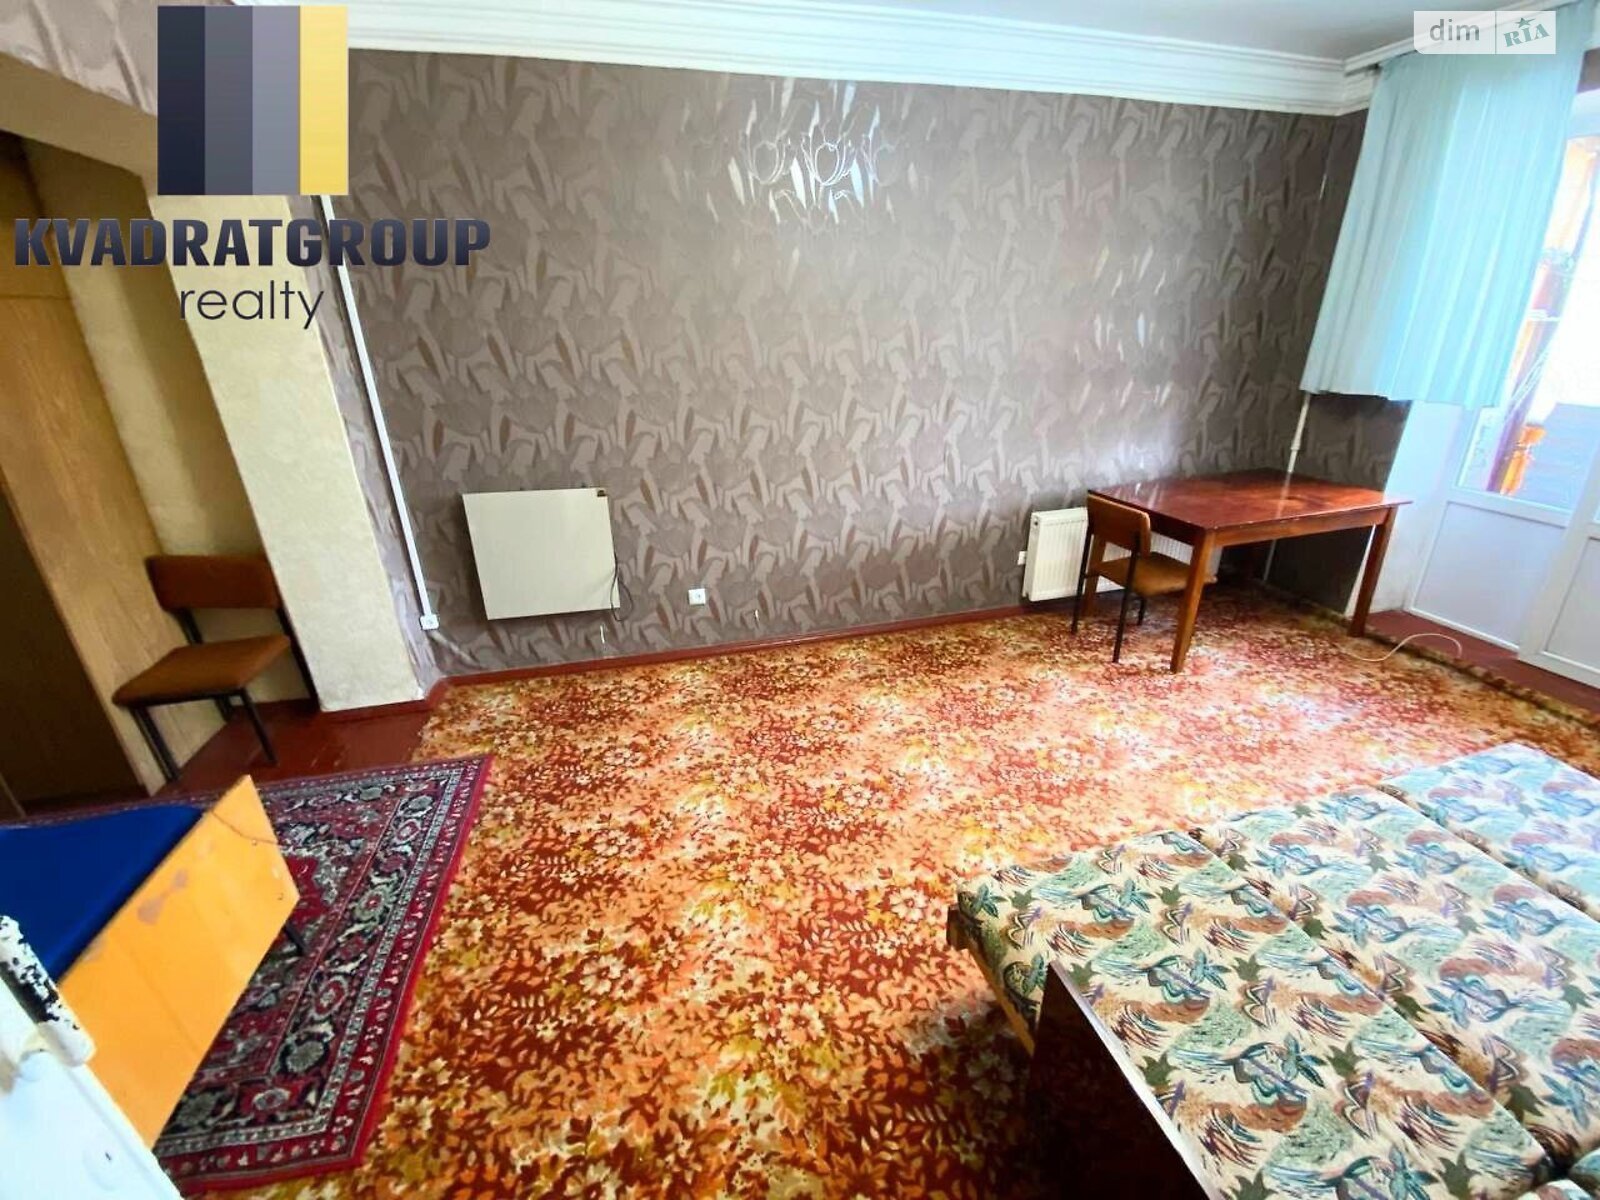 Продажа однокомнатной квартиры в Днепре, на ул. Караваева 37, район Новокодакский фото 1